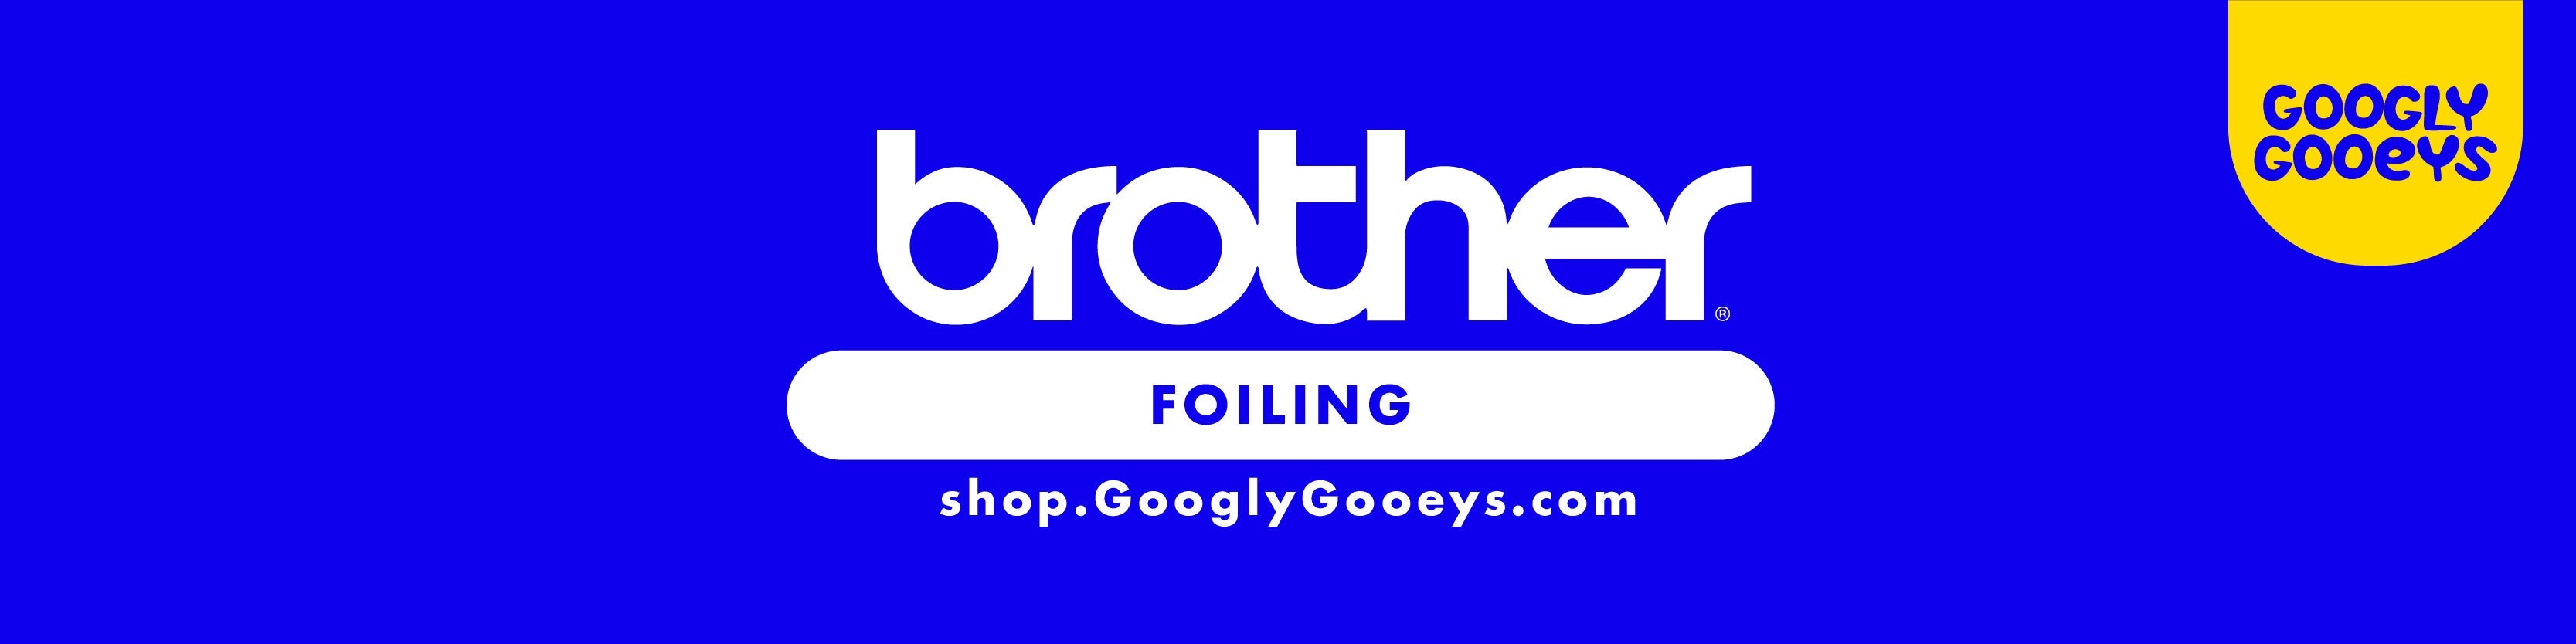 Googly Gooeys Shop - Brother Foiling